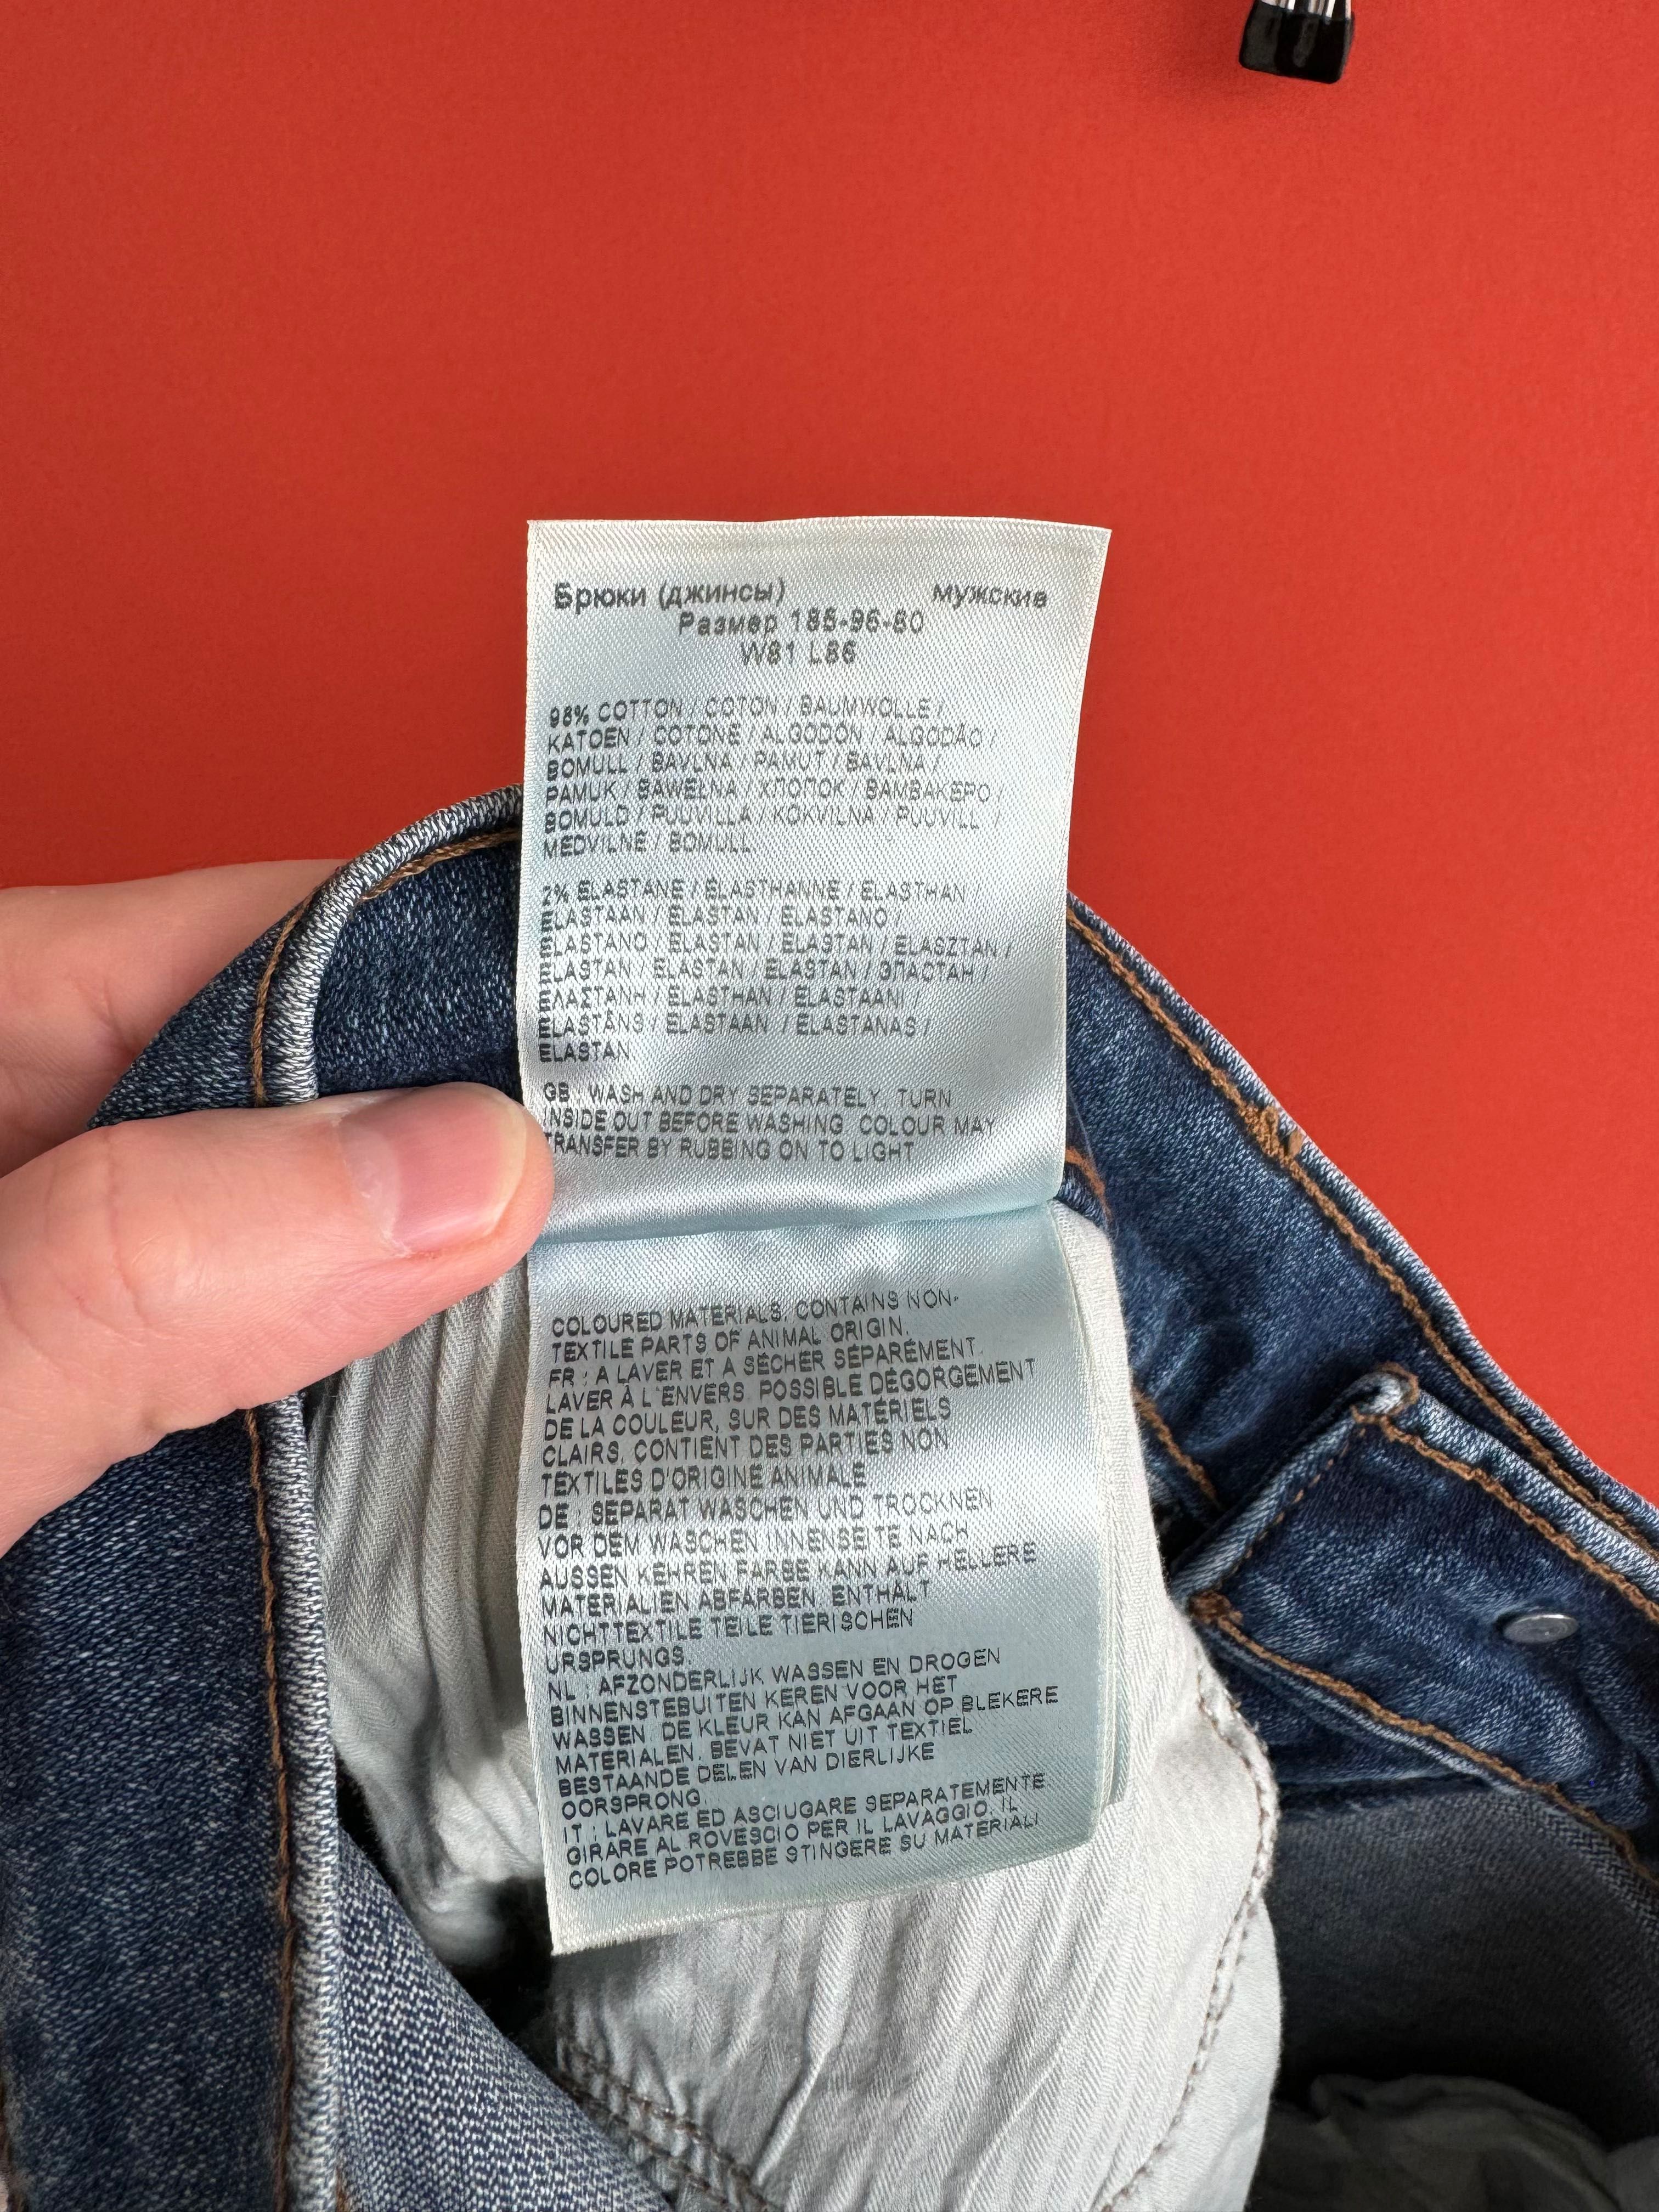 Wrangler Greensboro оригинал мужские джинсы штаны размер 32 33 Б У